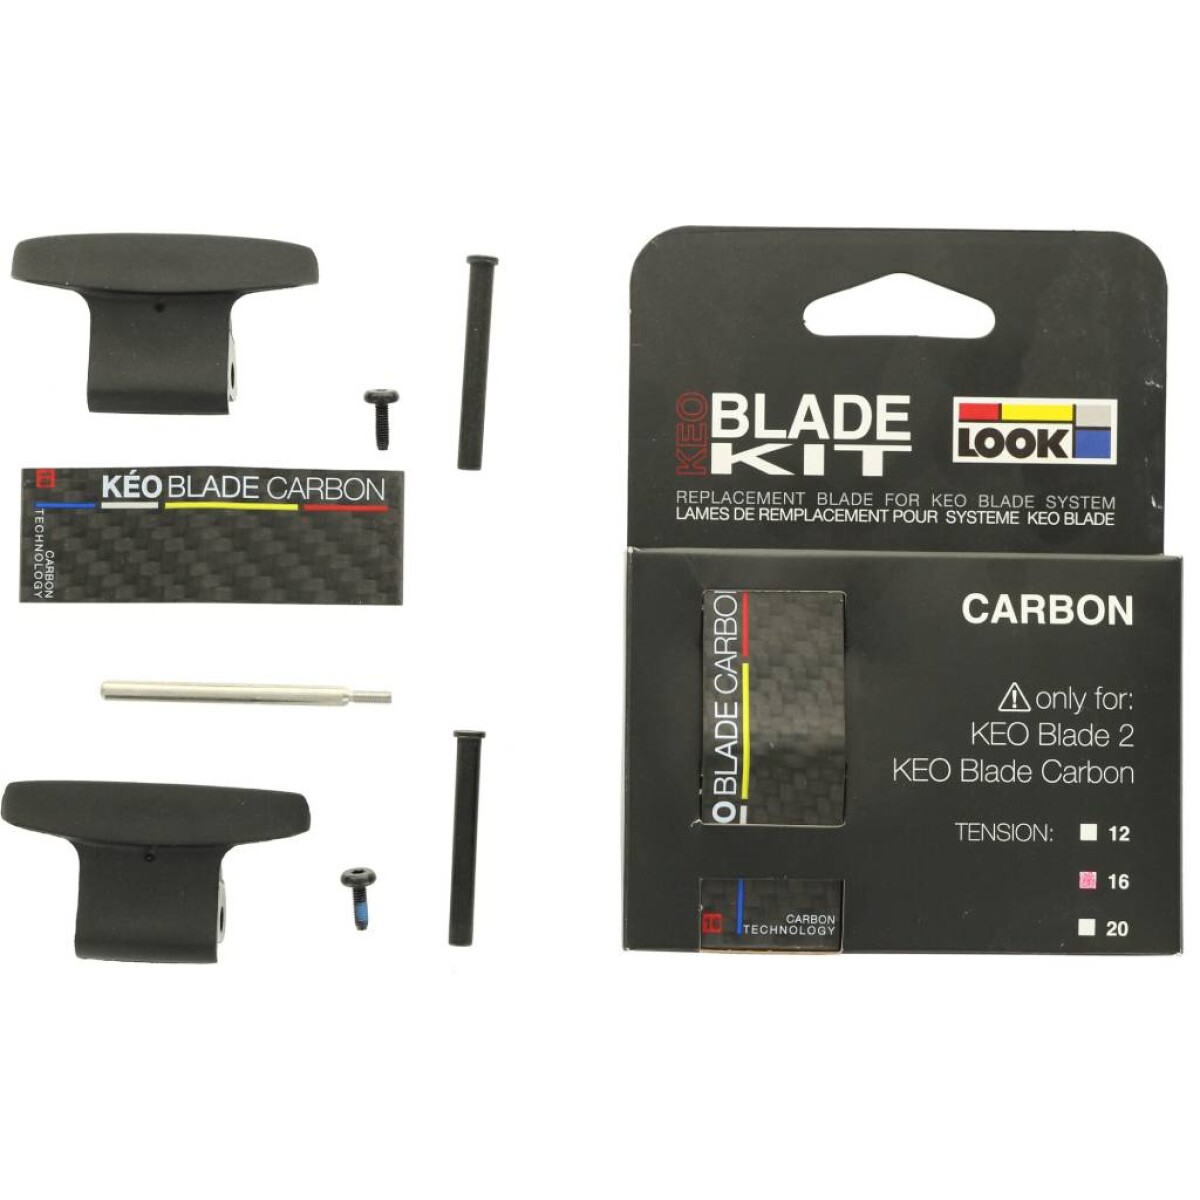 Kit Laminas Dureza 16 Pedal Look Blade Carbon 